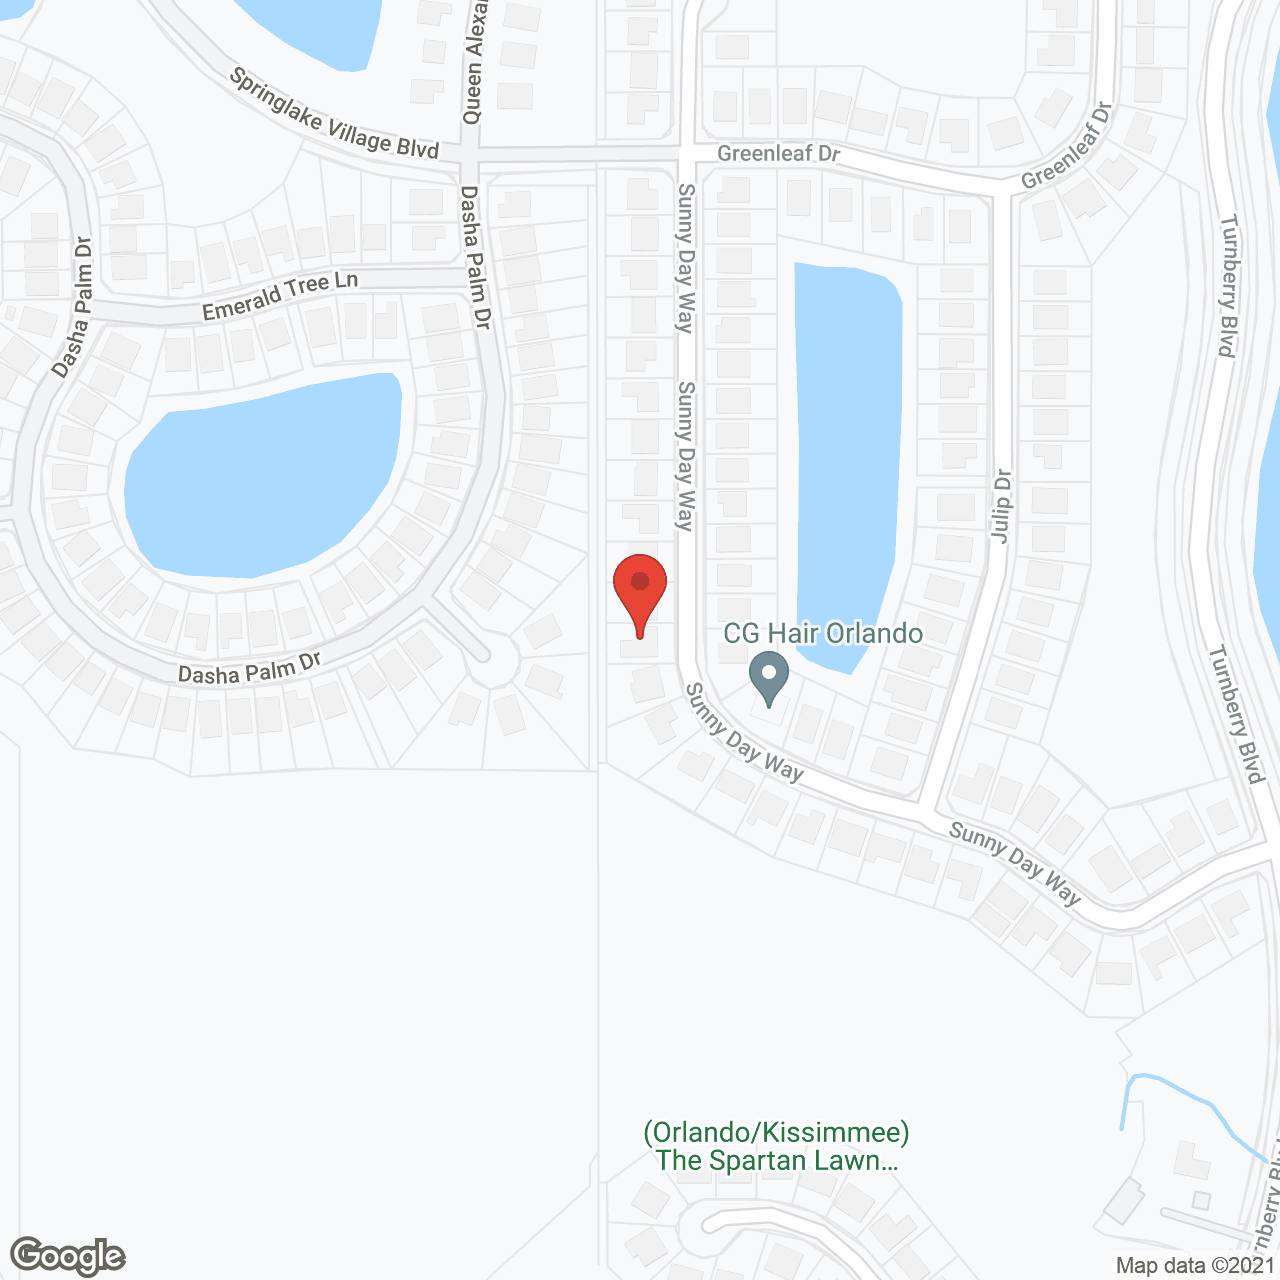 Elite Manor in google map